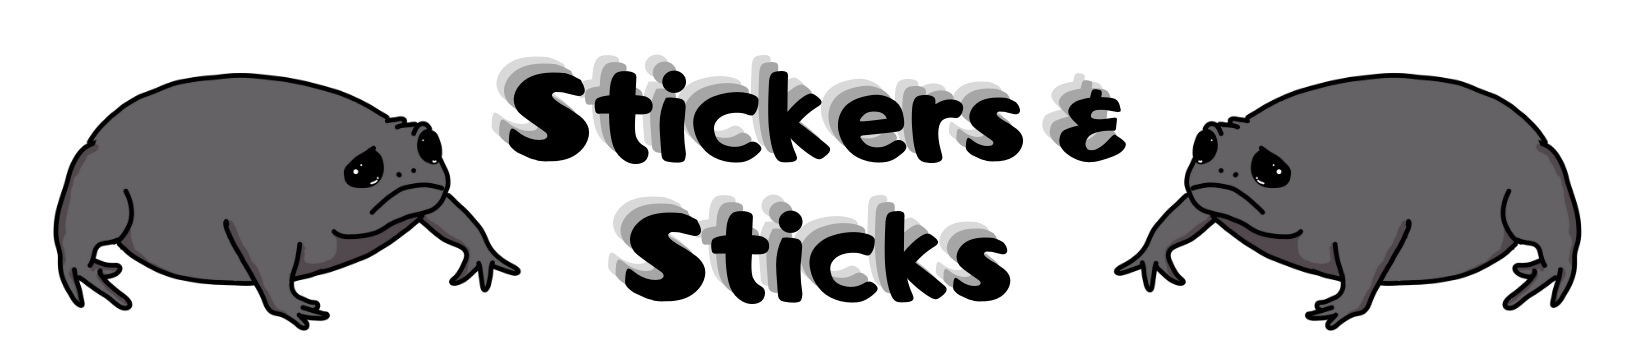 Stickers and Sticks